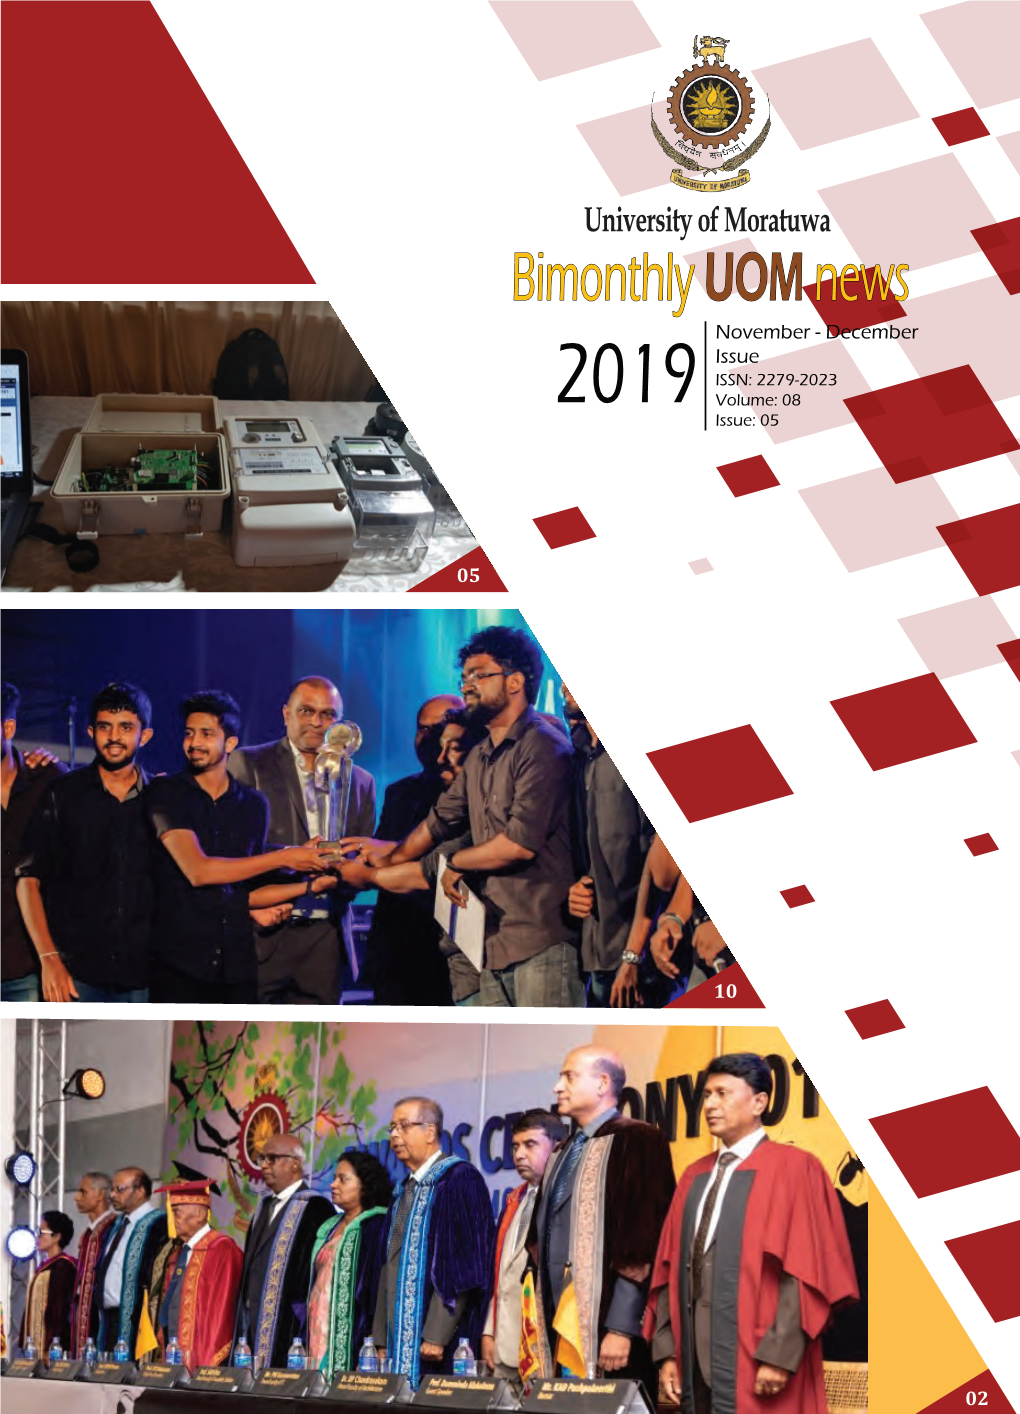 University of Moratuwa Bimonthly UOM News November - December Issue ISSN: 2279-2023 2019 Volume: 08 Issue: 05